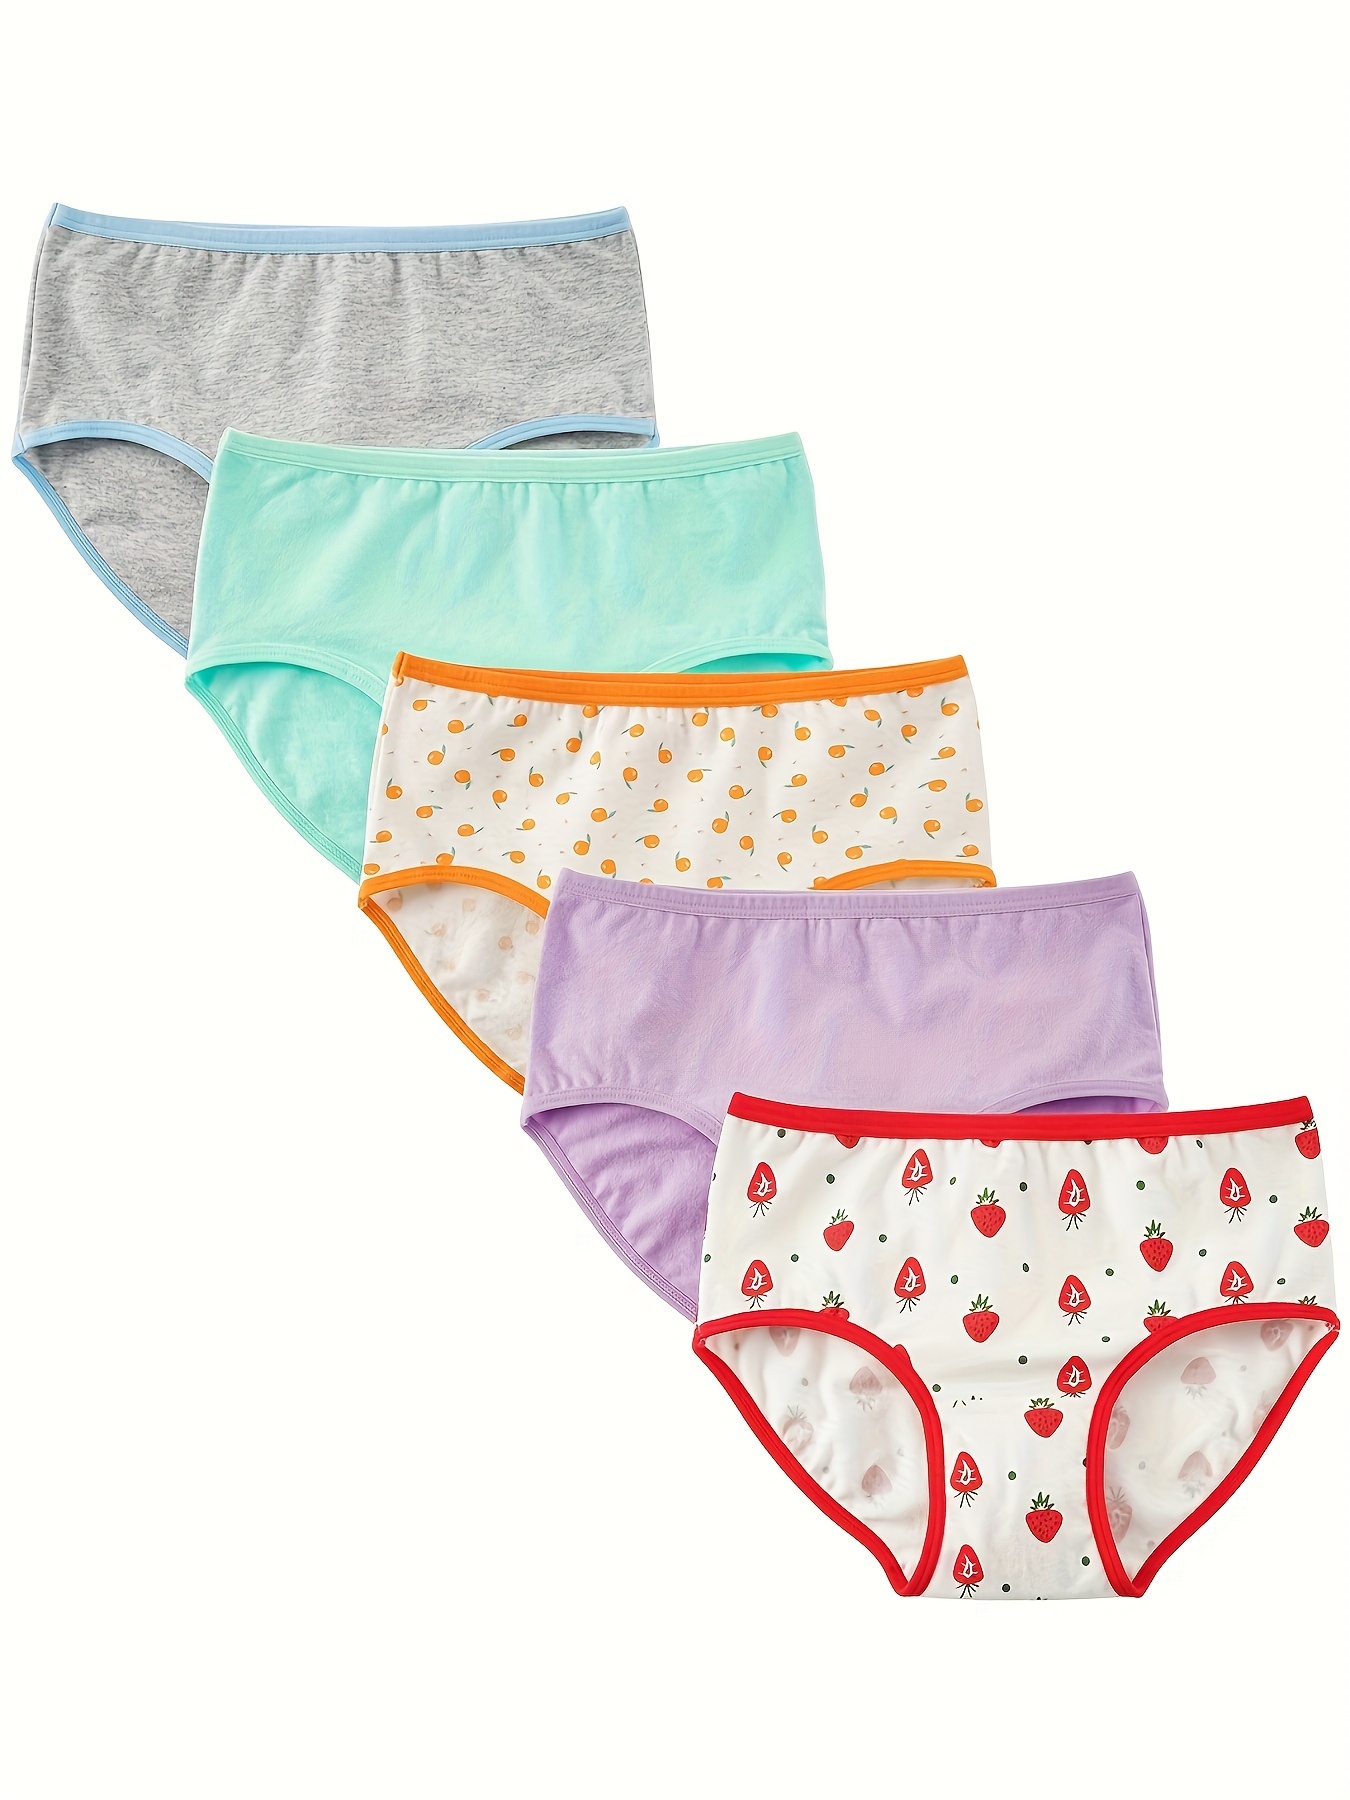  Girls' Underwear - Carter's / Girls' Underwear / Girls'  Clothing: Clothing, Shoes & Jewelry